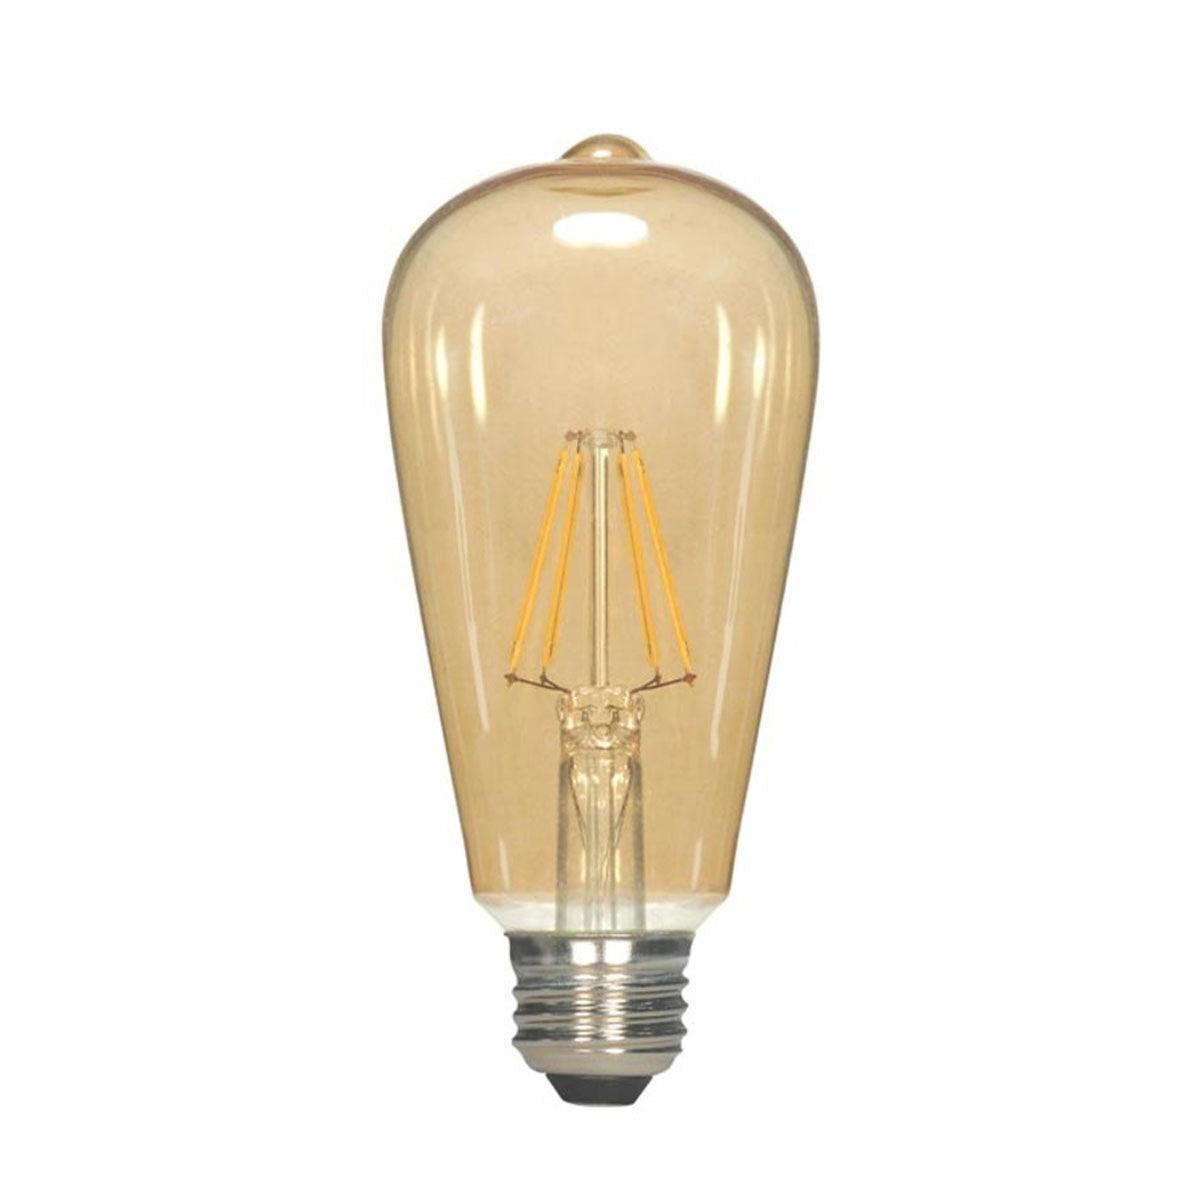 LED ST19 Straight Tapered Bulb, 5 Watt, 380 Lumens, 2000K, E26 Medium Base, Amber Finish